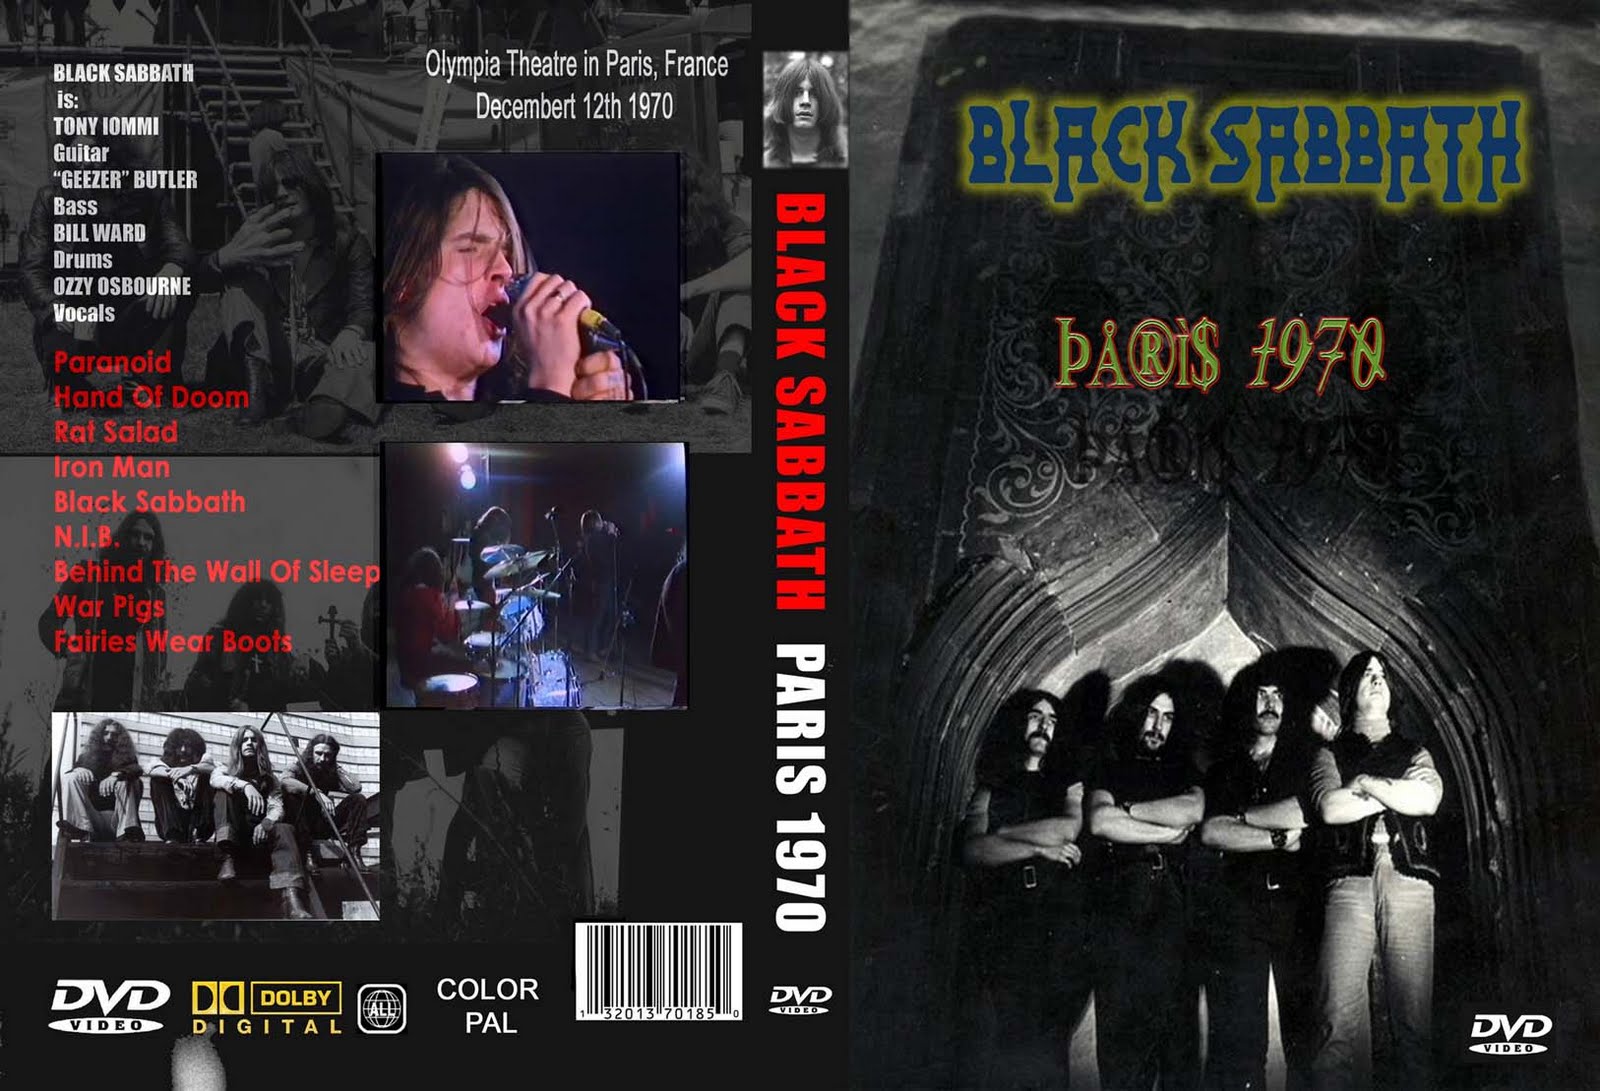 http://1.bp.blogspot.com/-eRDg1v-ipHw/TmDZx3suDuI/AAAAAAAADhQ/dird6cWG7lA/s1600/DVD+Cover+Low+Quality+-+BlackSabbath_1970-12-19_ParisFrance.jpg